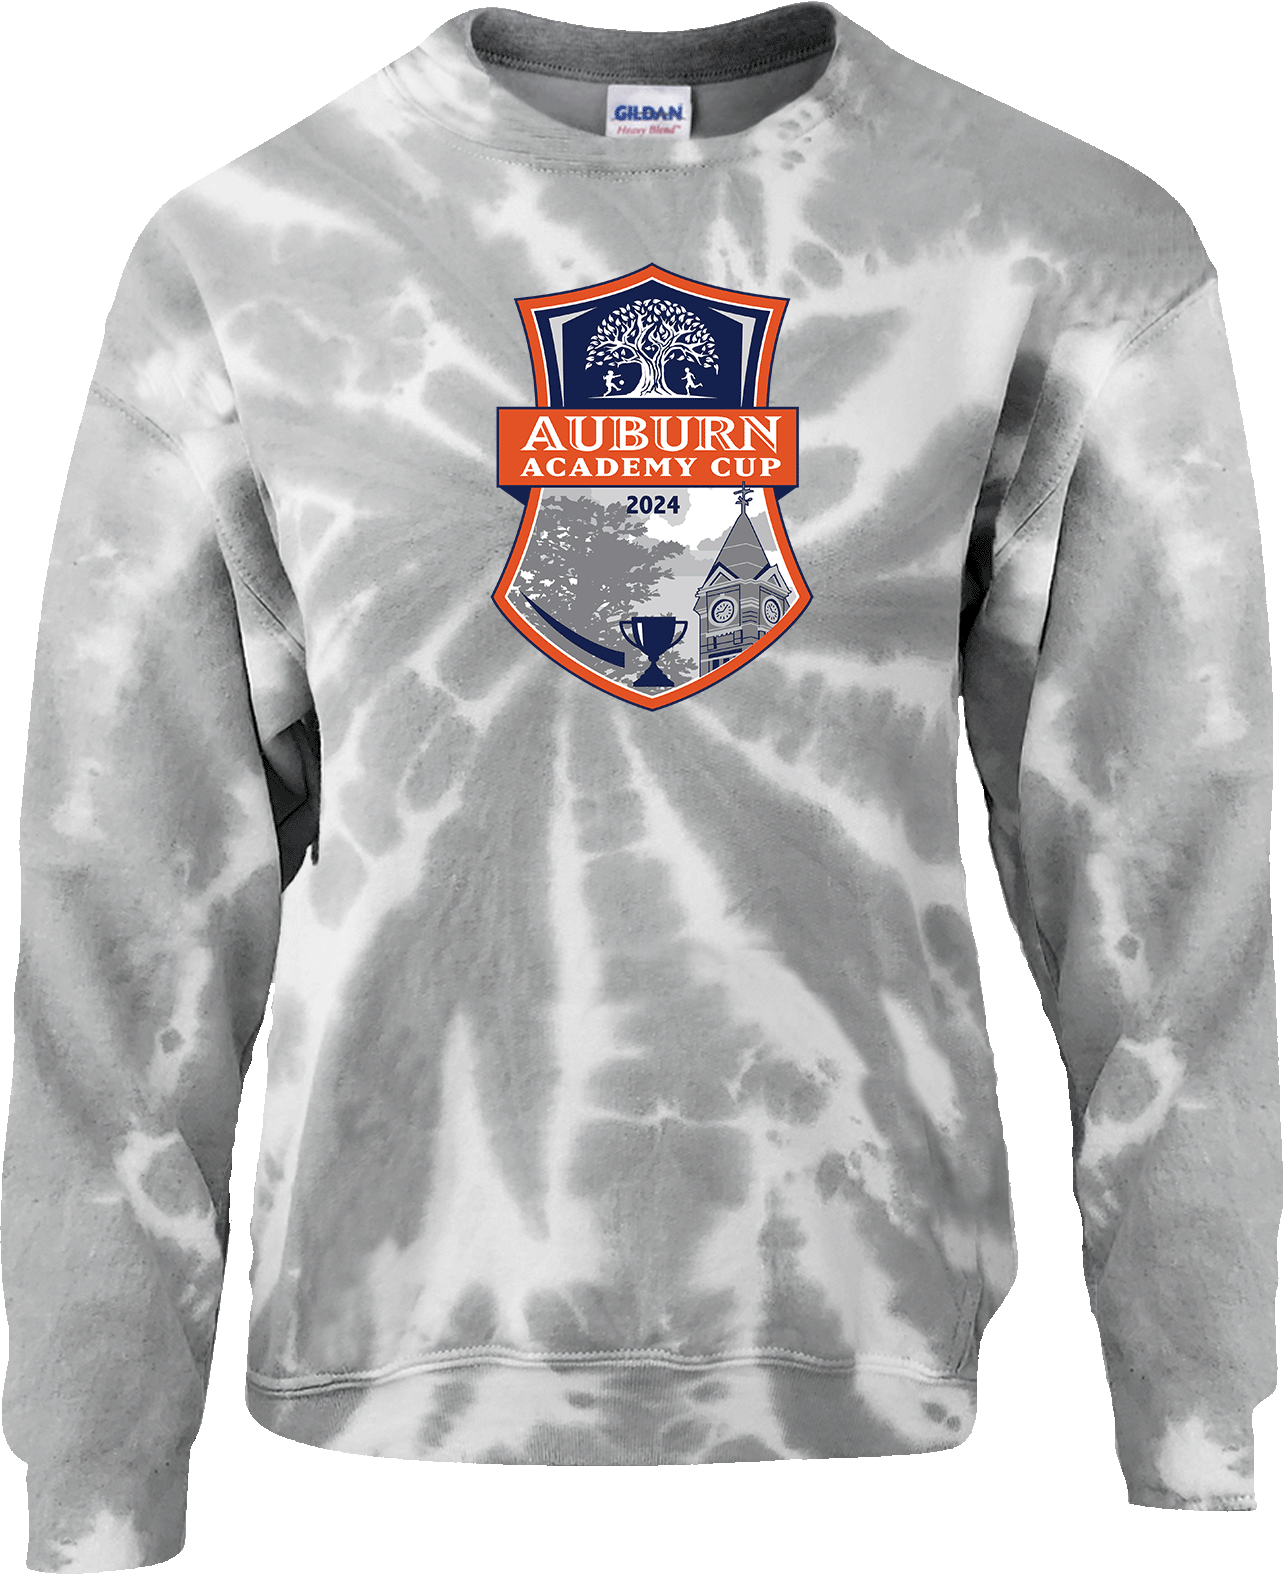 Crew Sweatershirt - 2024 Auburn Academy Cup